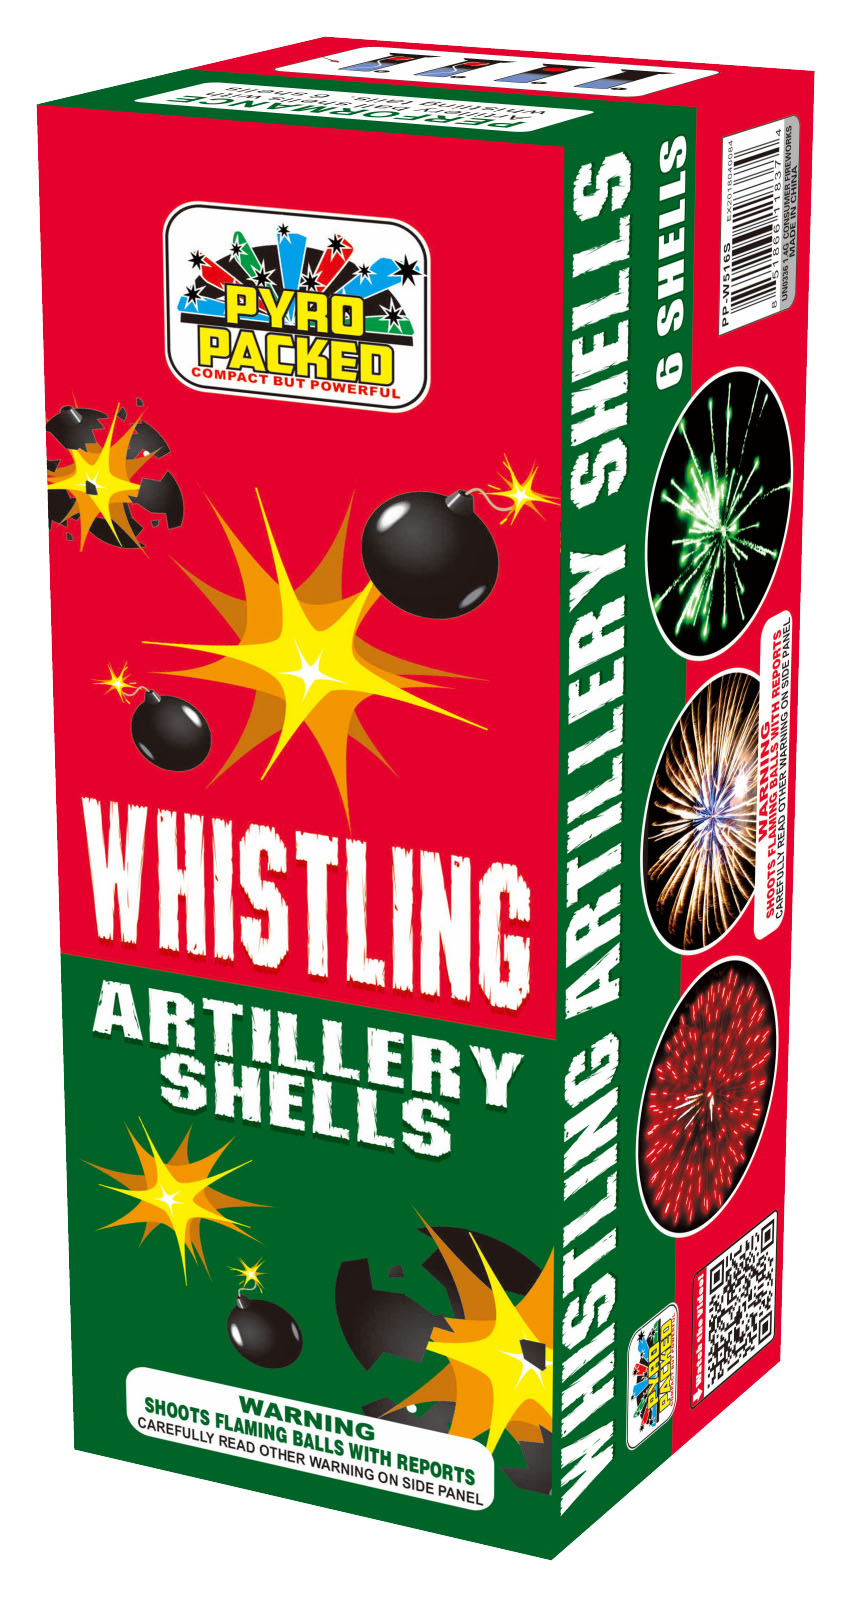 Whistling Artillery Shells